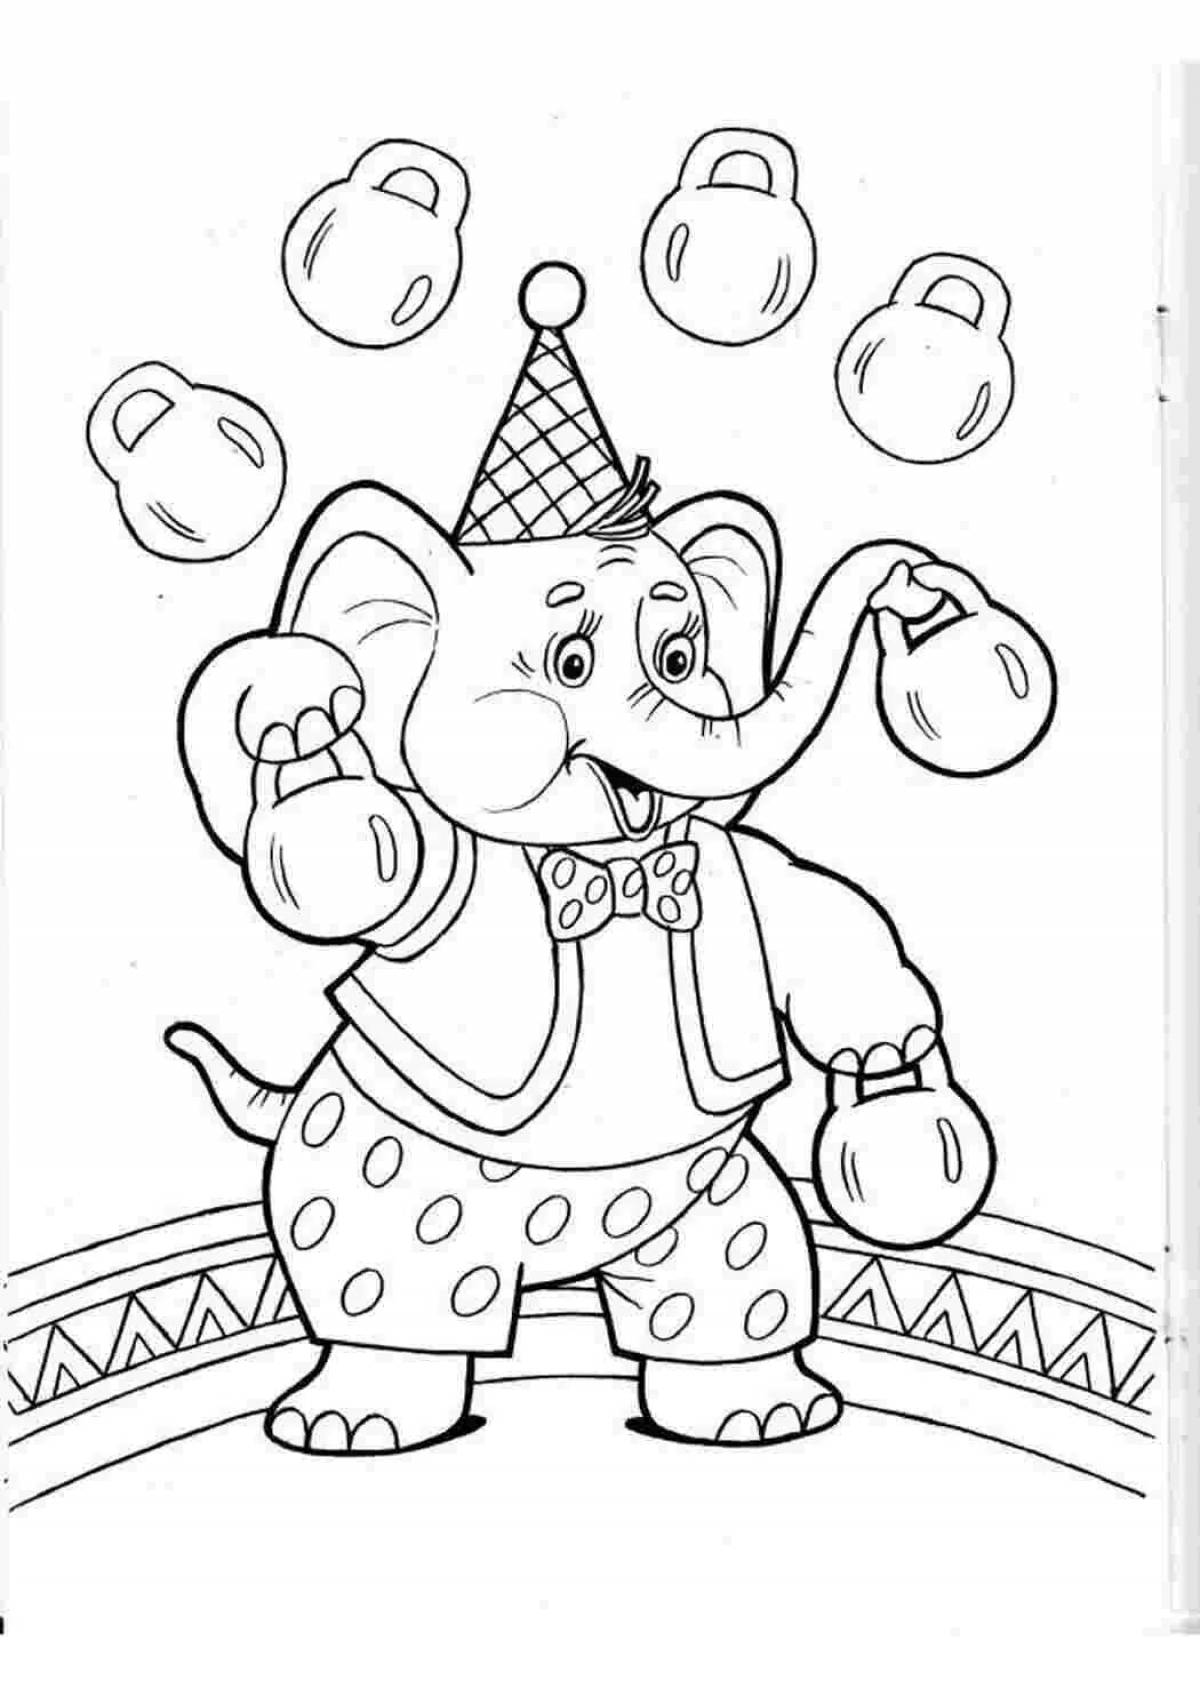 Great circus coloring book for preschoolers